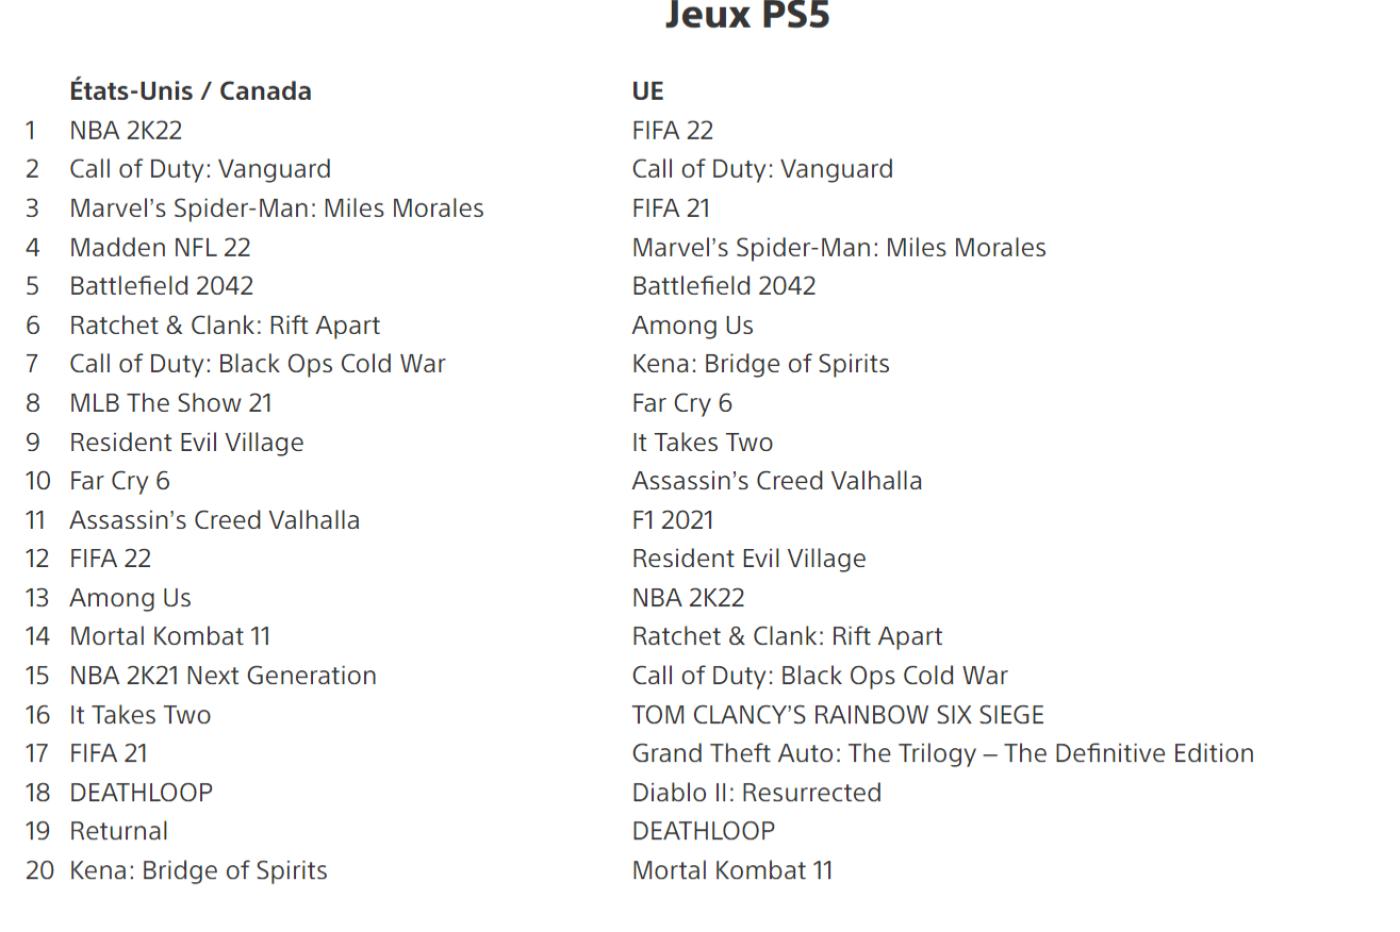 PS4 and PS5 playstation games